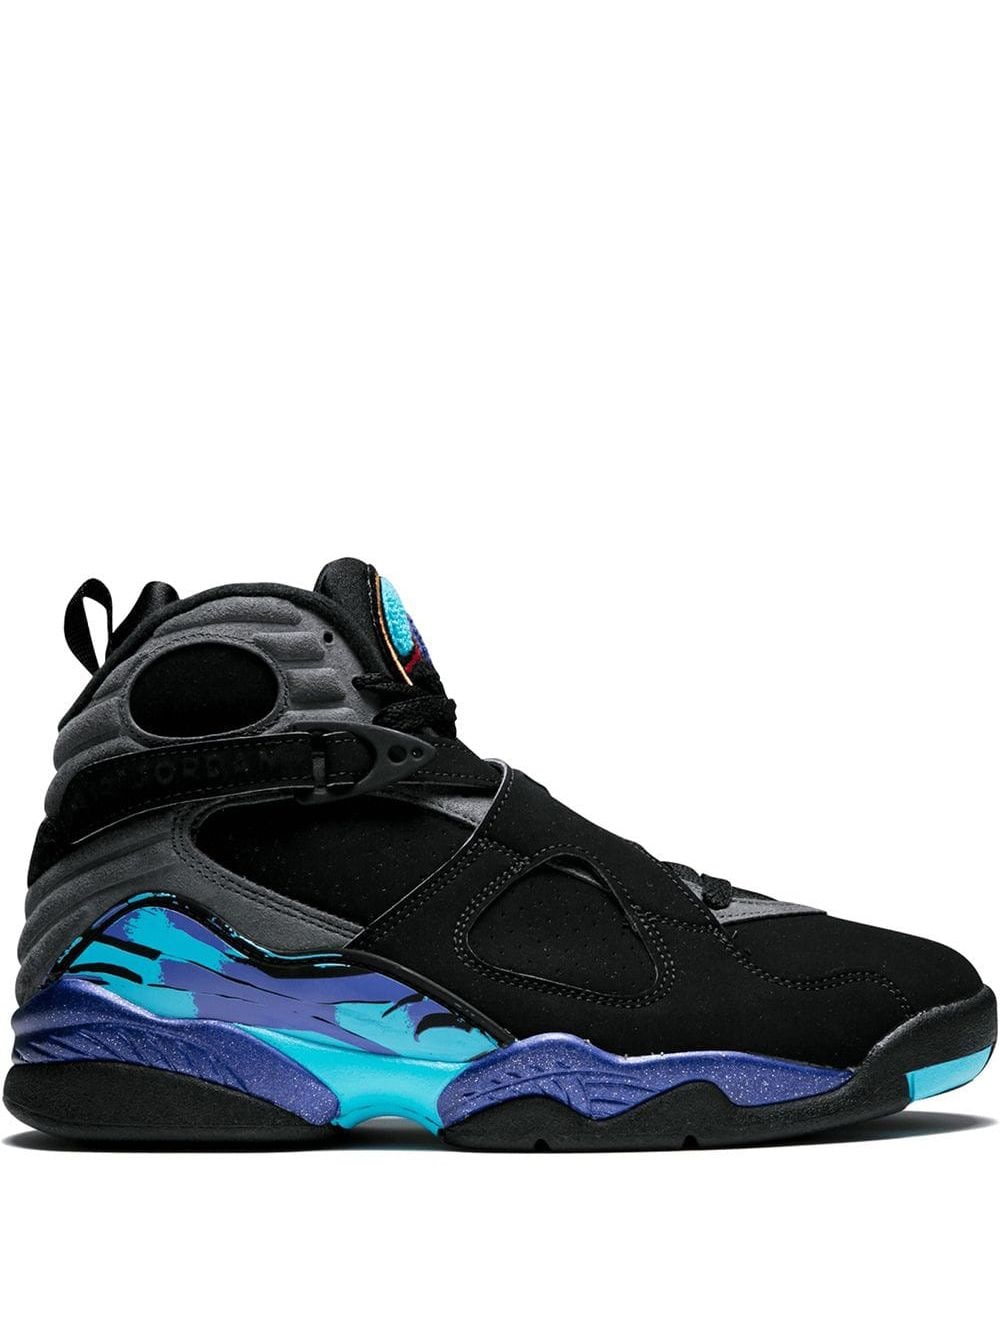 Jordan Air Jordan 8 Retro "Aqua" sneakers - Black